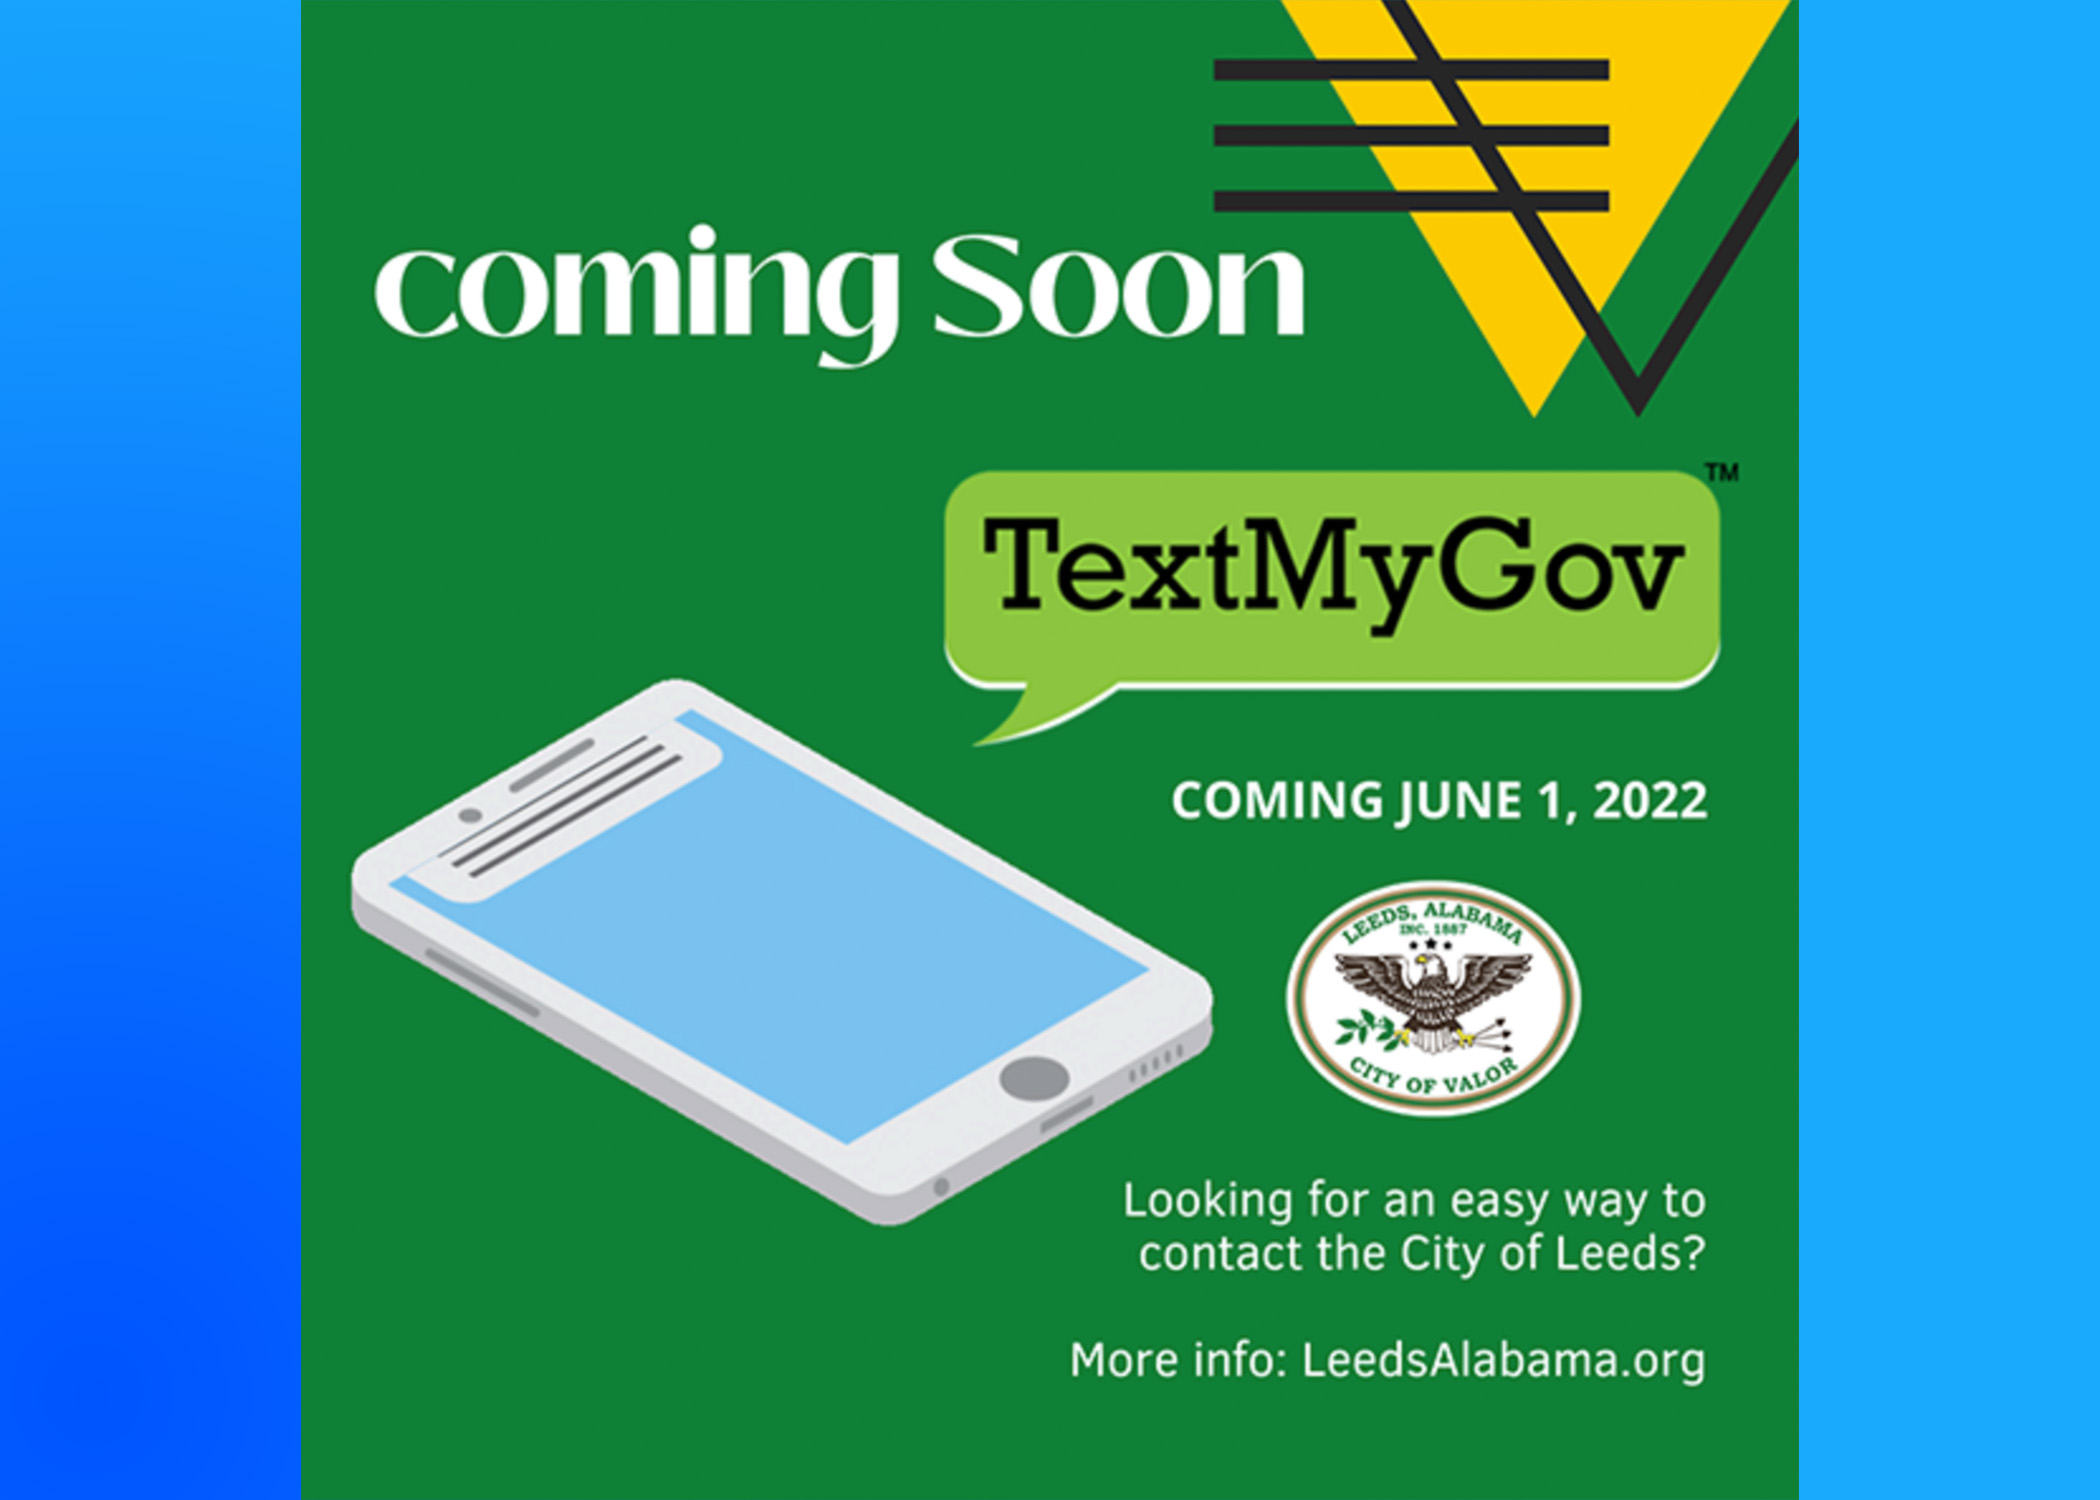 City of Leeds announces 'Text My Gov' services